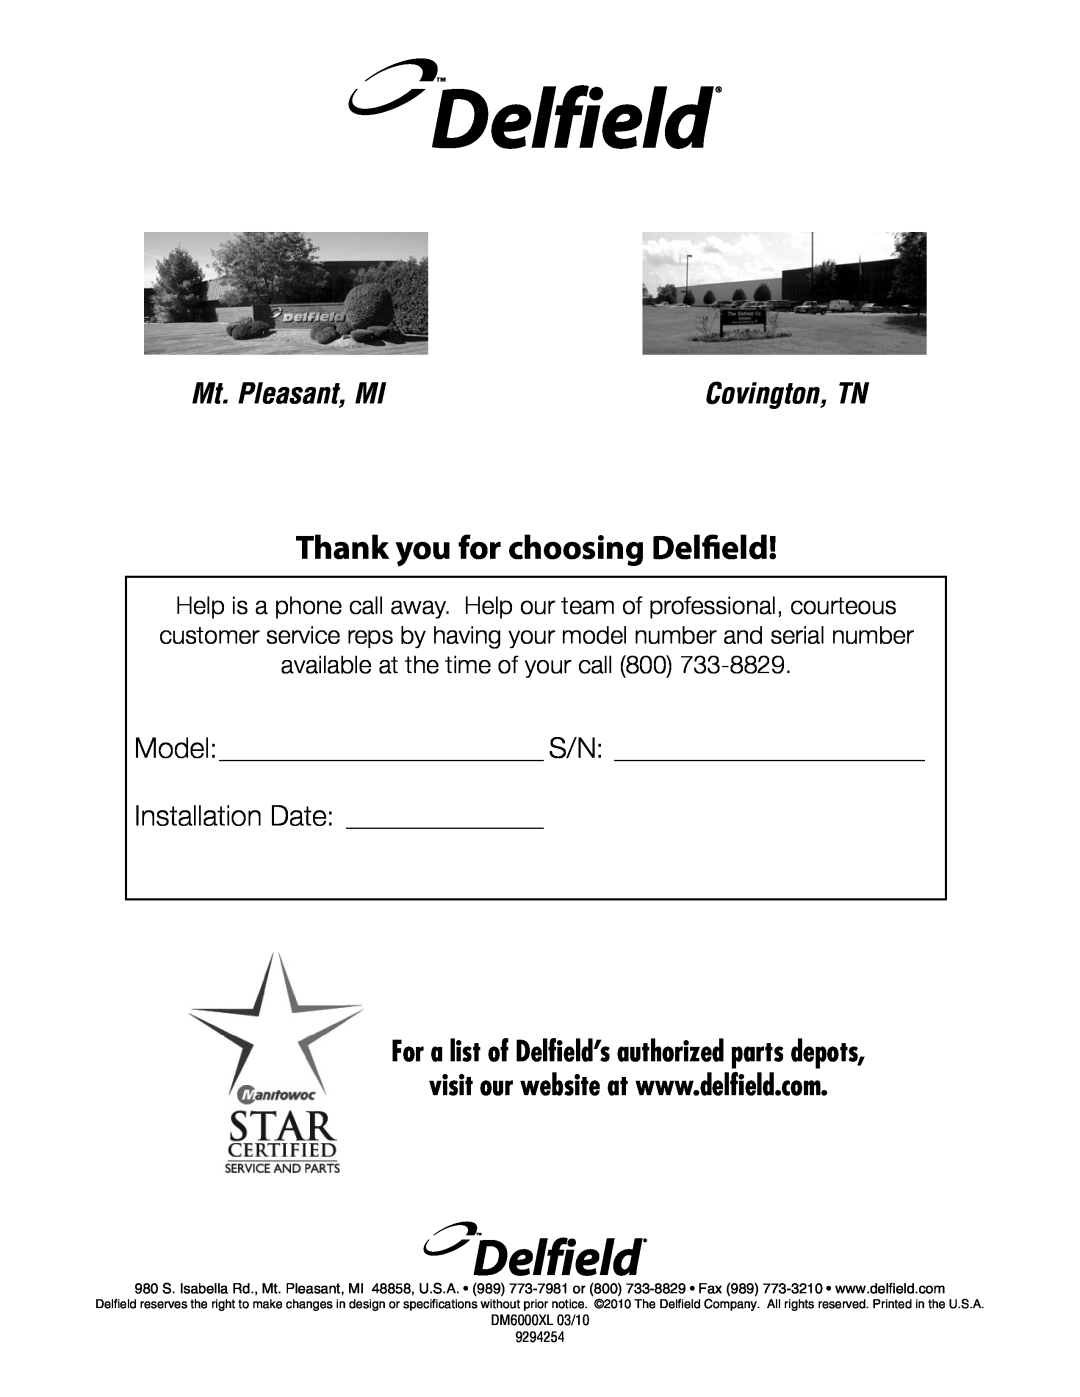 Delfield 6100XL Thank you for choosing Delfield, Mt. Pleasant, MI, Installation Date:_ ______________, Covington, TN 